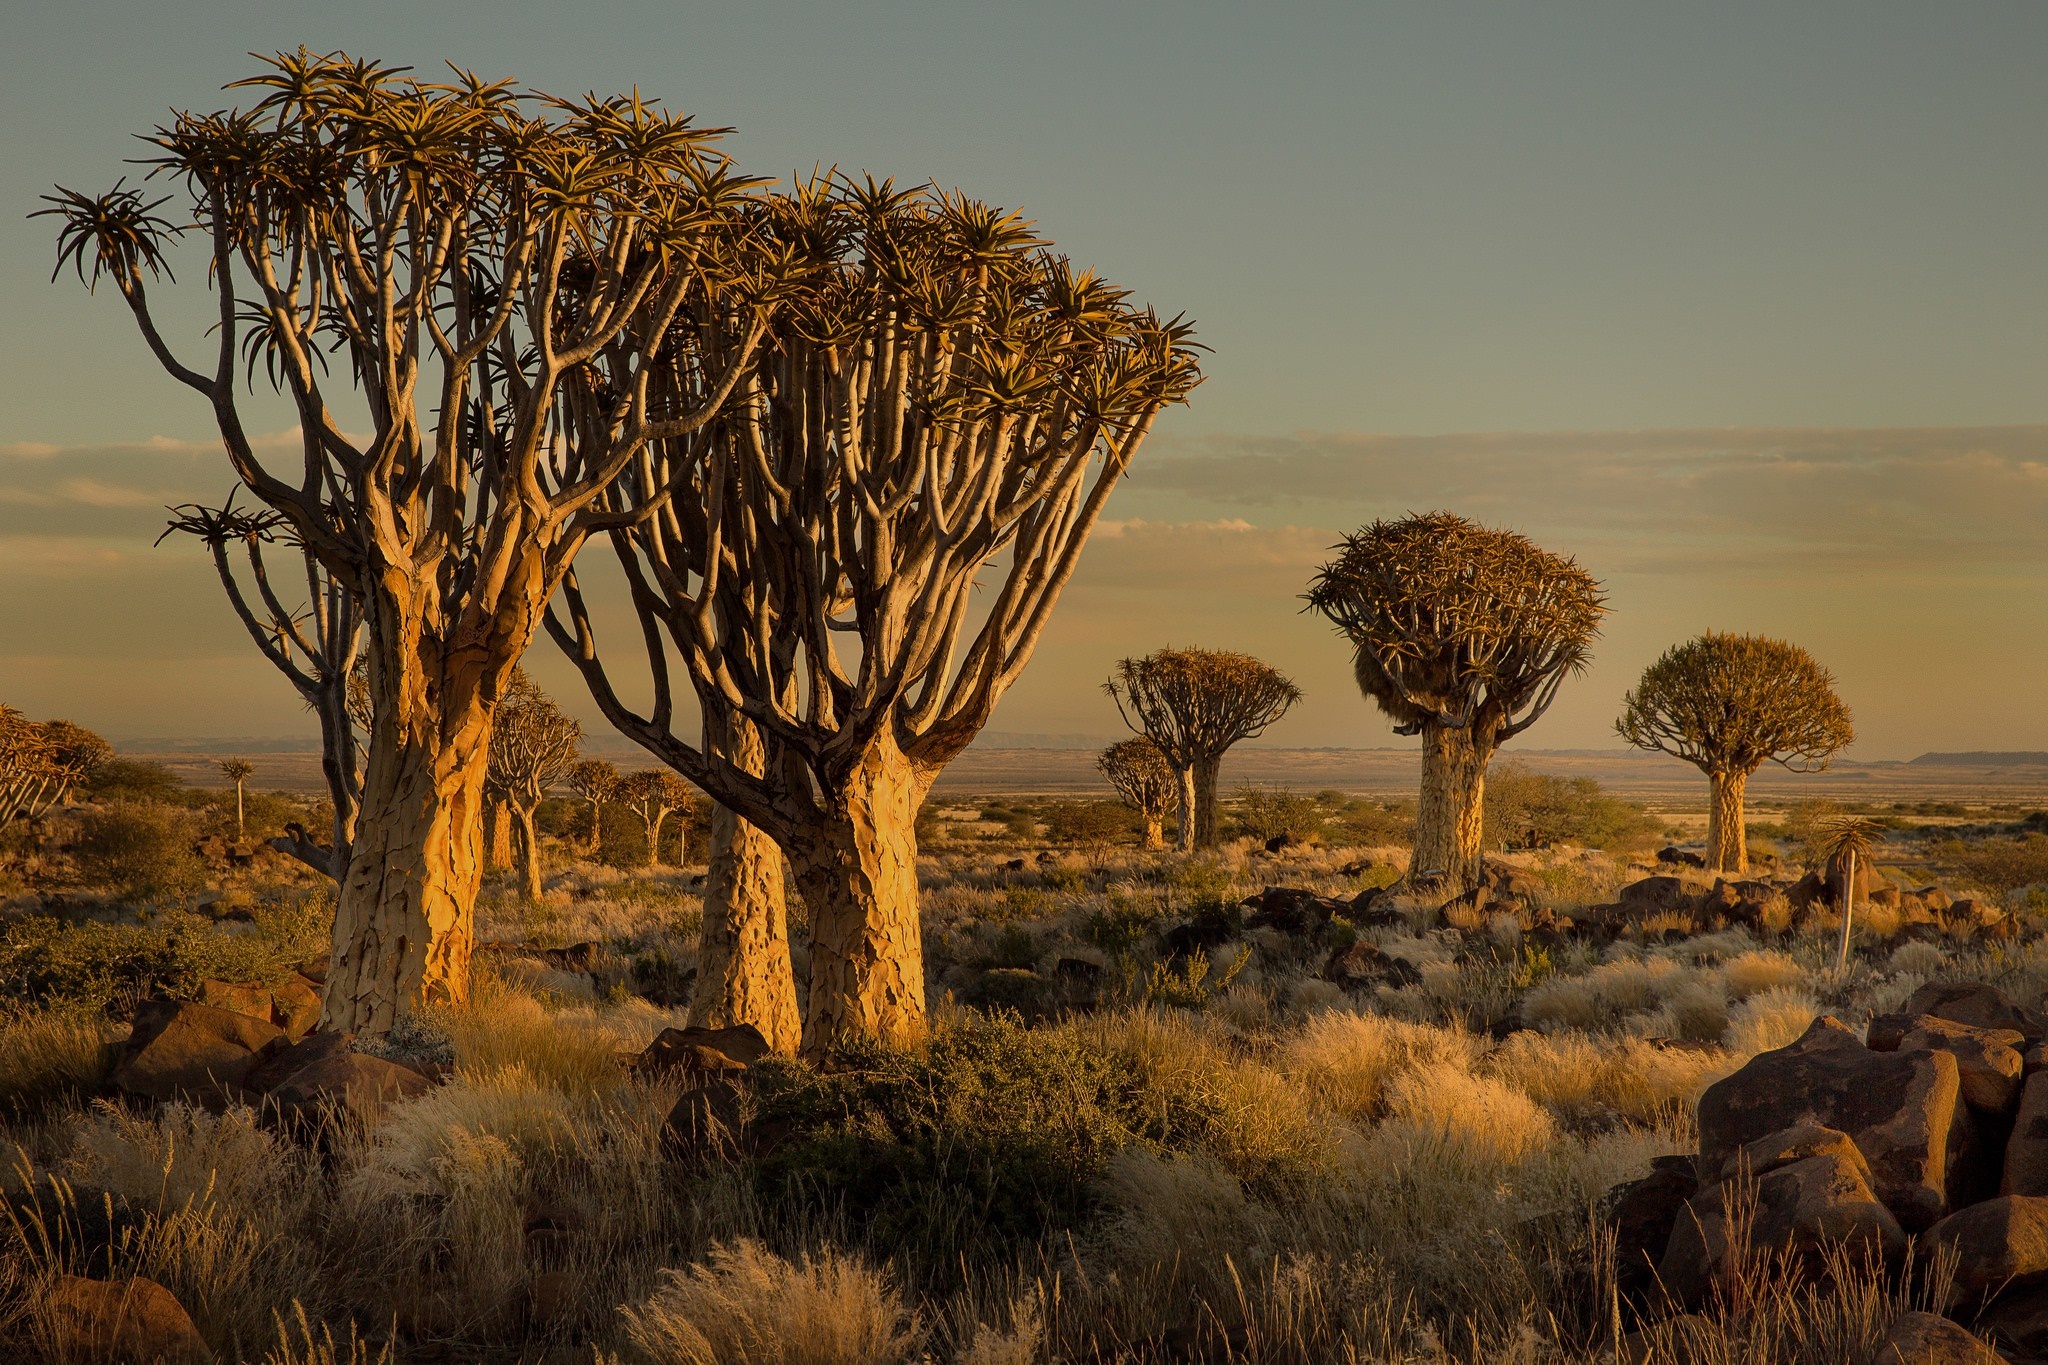 1114521-trees-landscape-sunset-nature-wildlife-Africa-shrubs-savannah-Namibia-tree-Safari-herd-plain-fauna-habitat-natural-environment-ecosystem-arecales-savanna